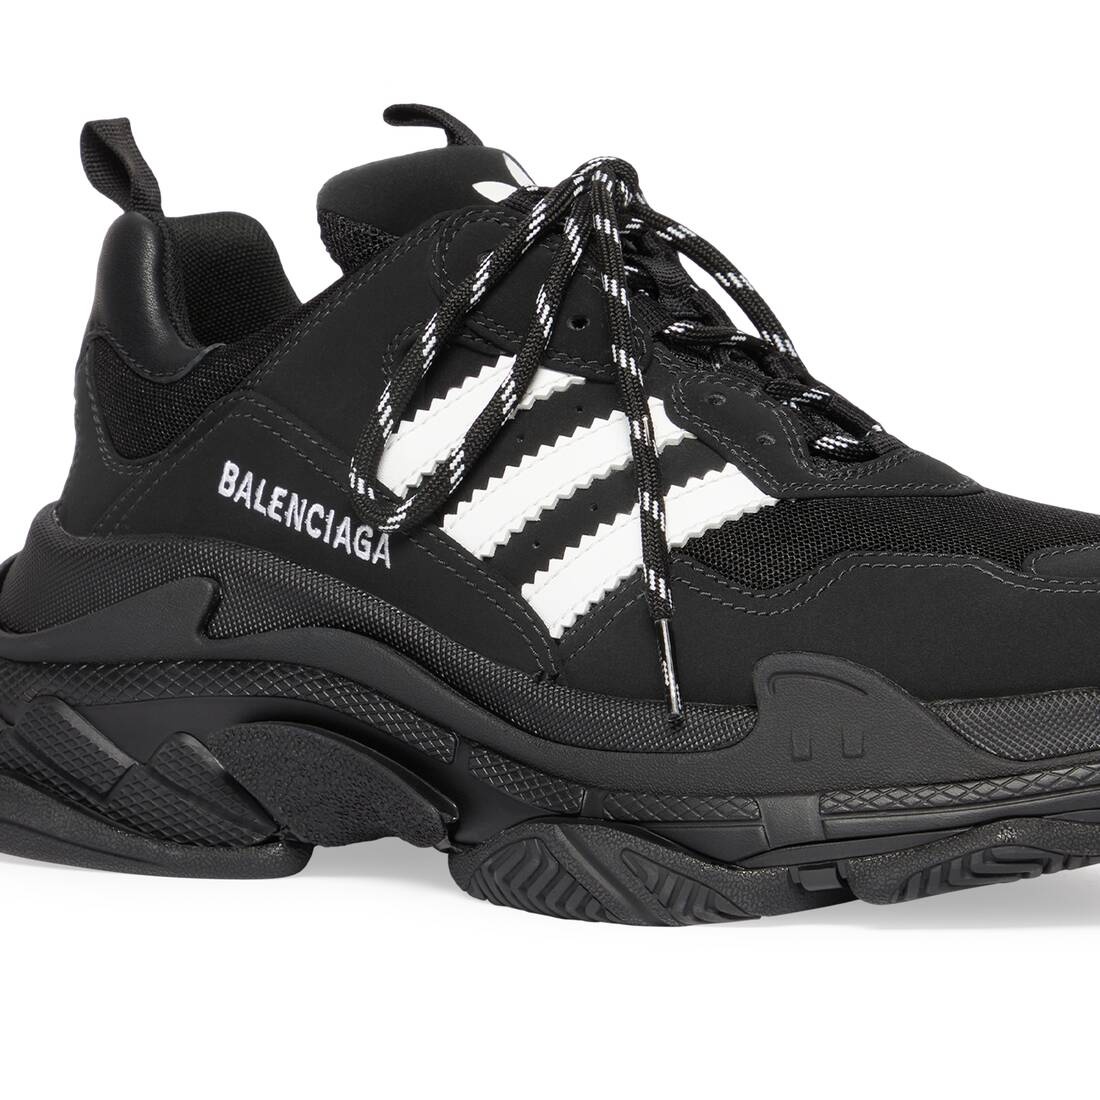 Men's Balenciaga / Adidas Triple S Sneaker in Black - 8